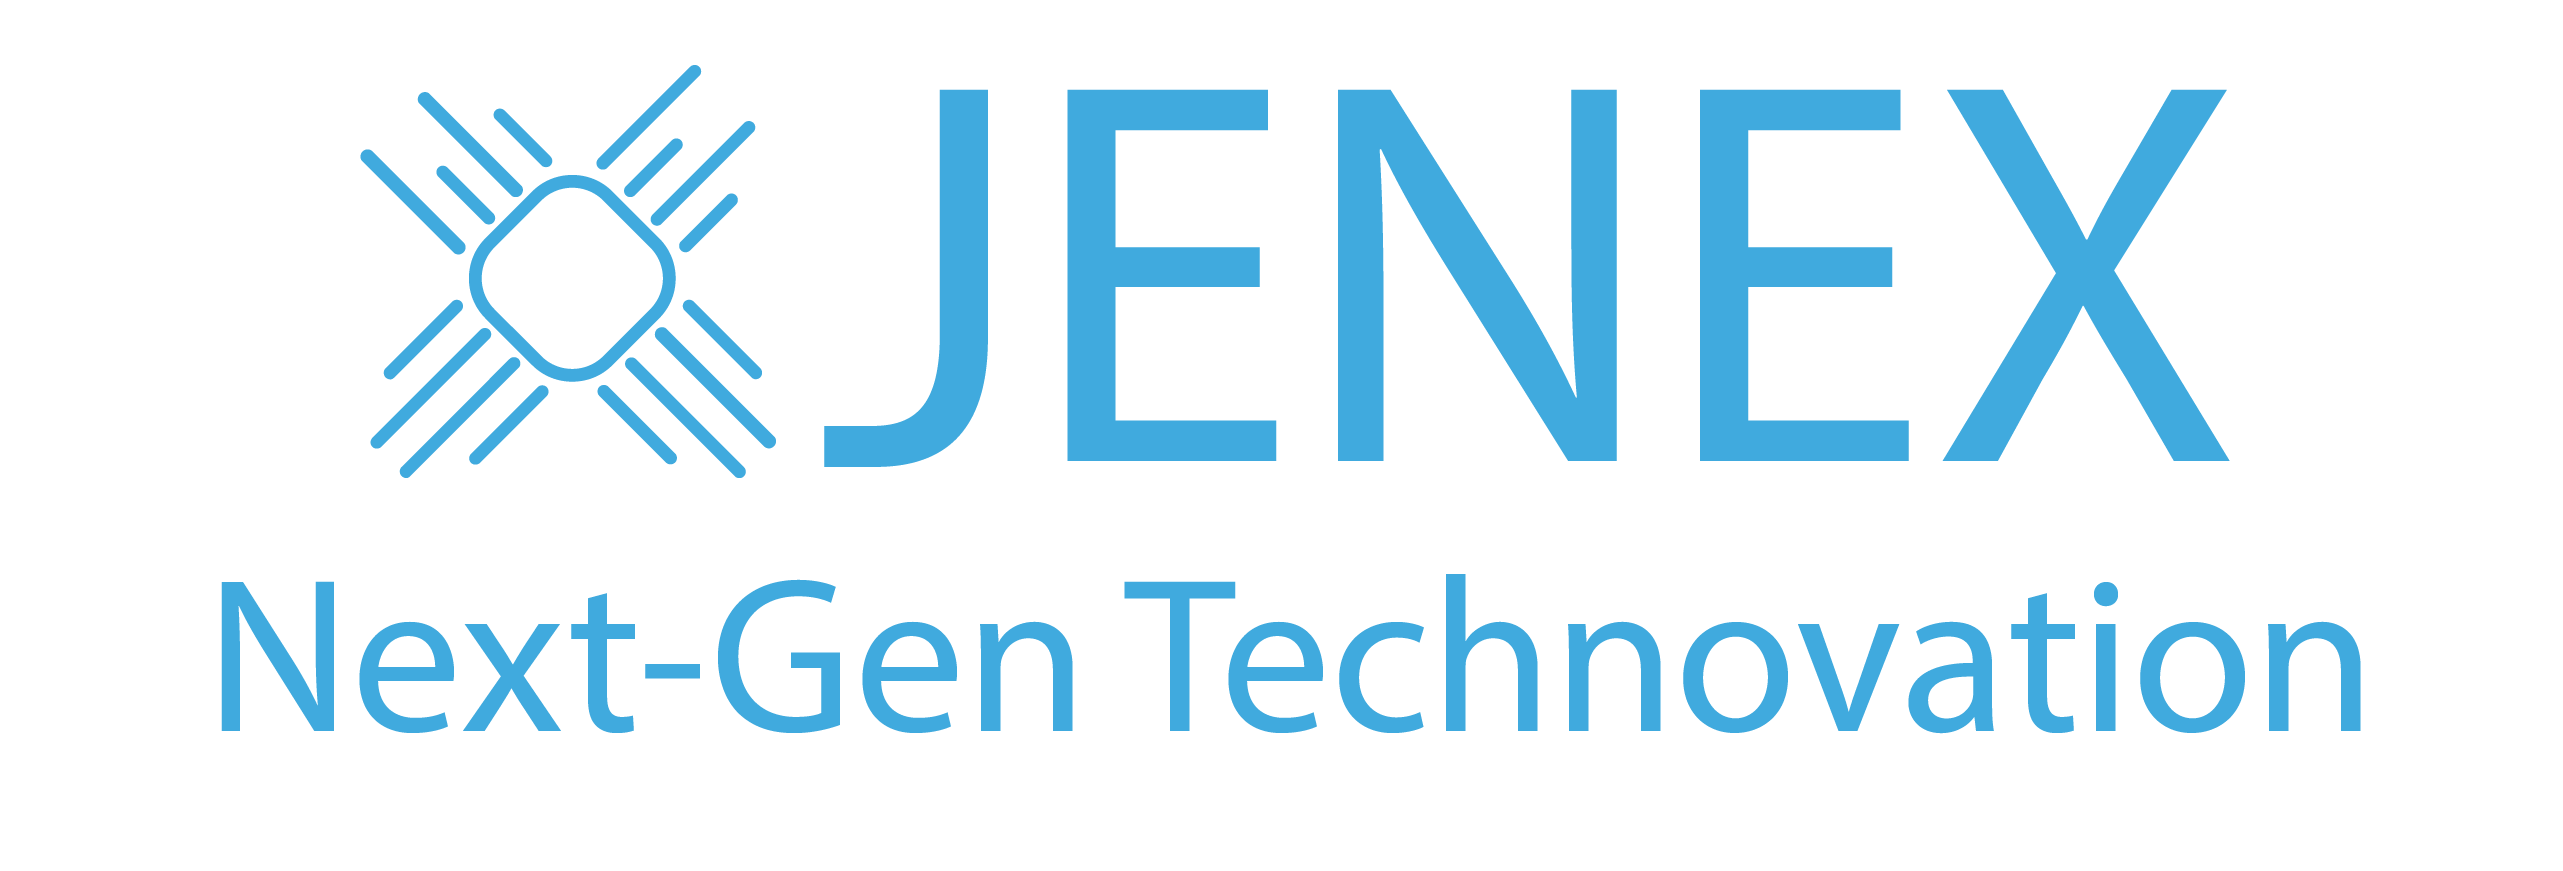 1645433040Jenex Logo-14.png